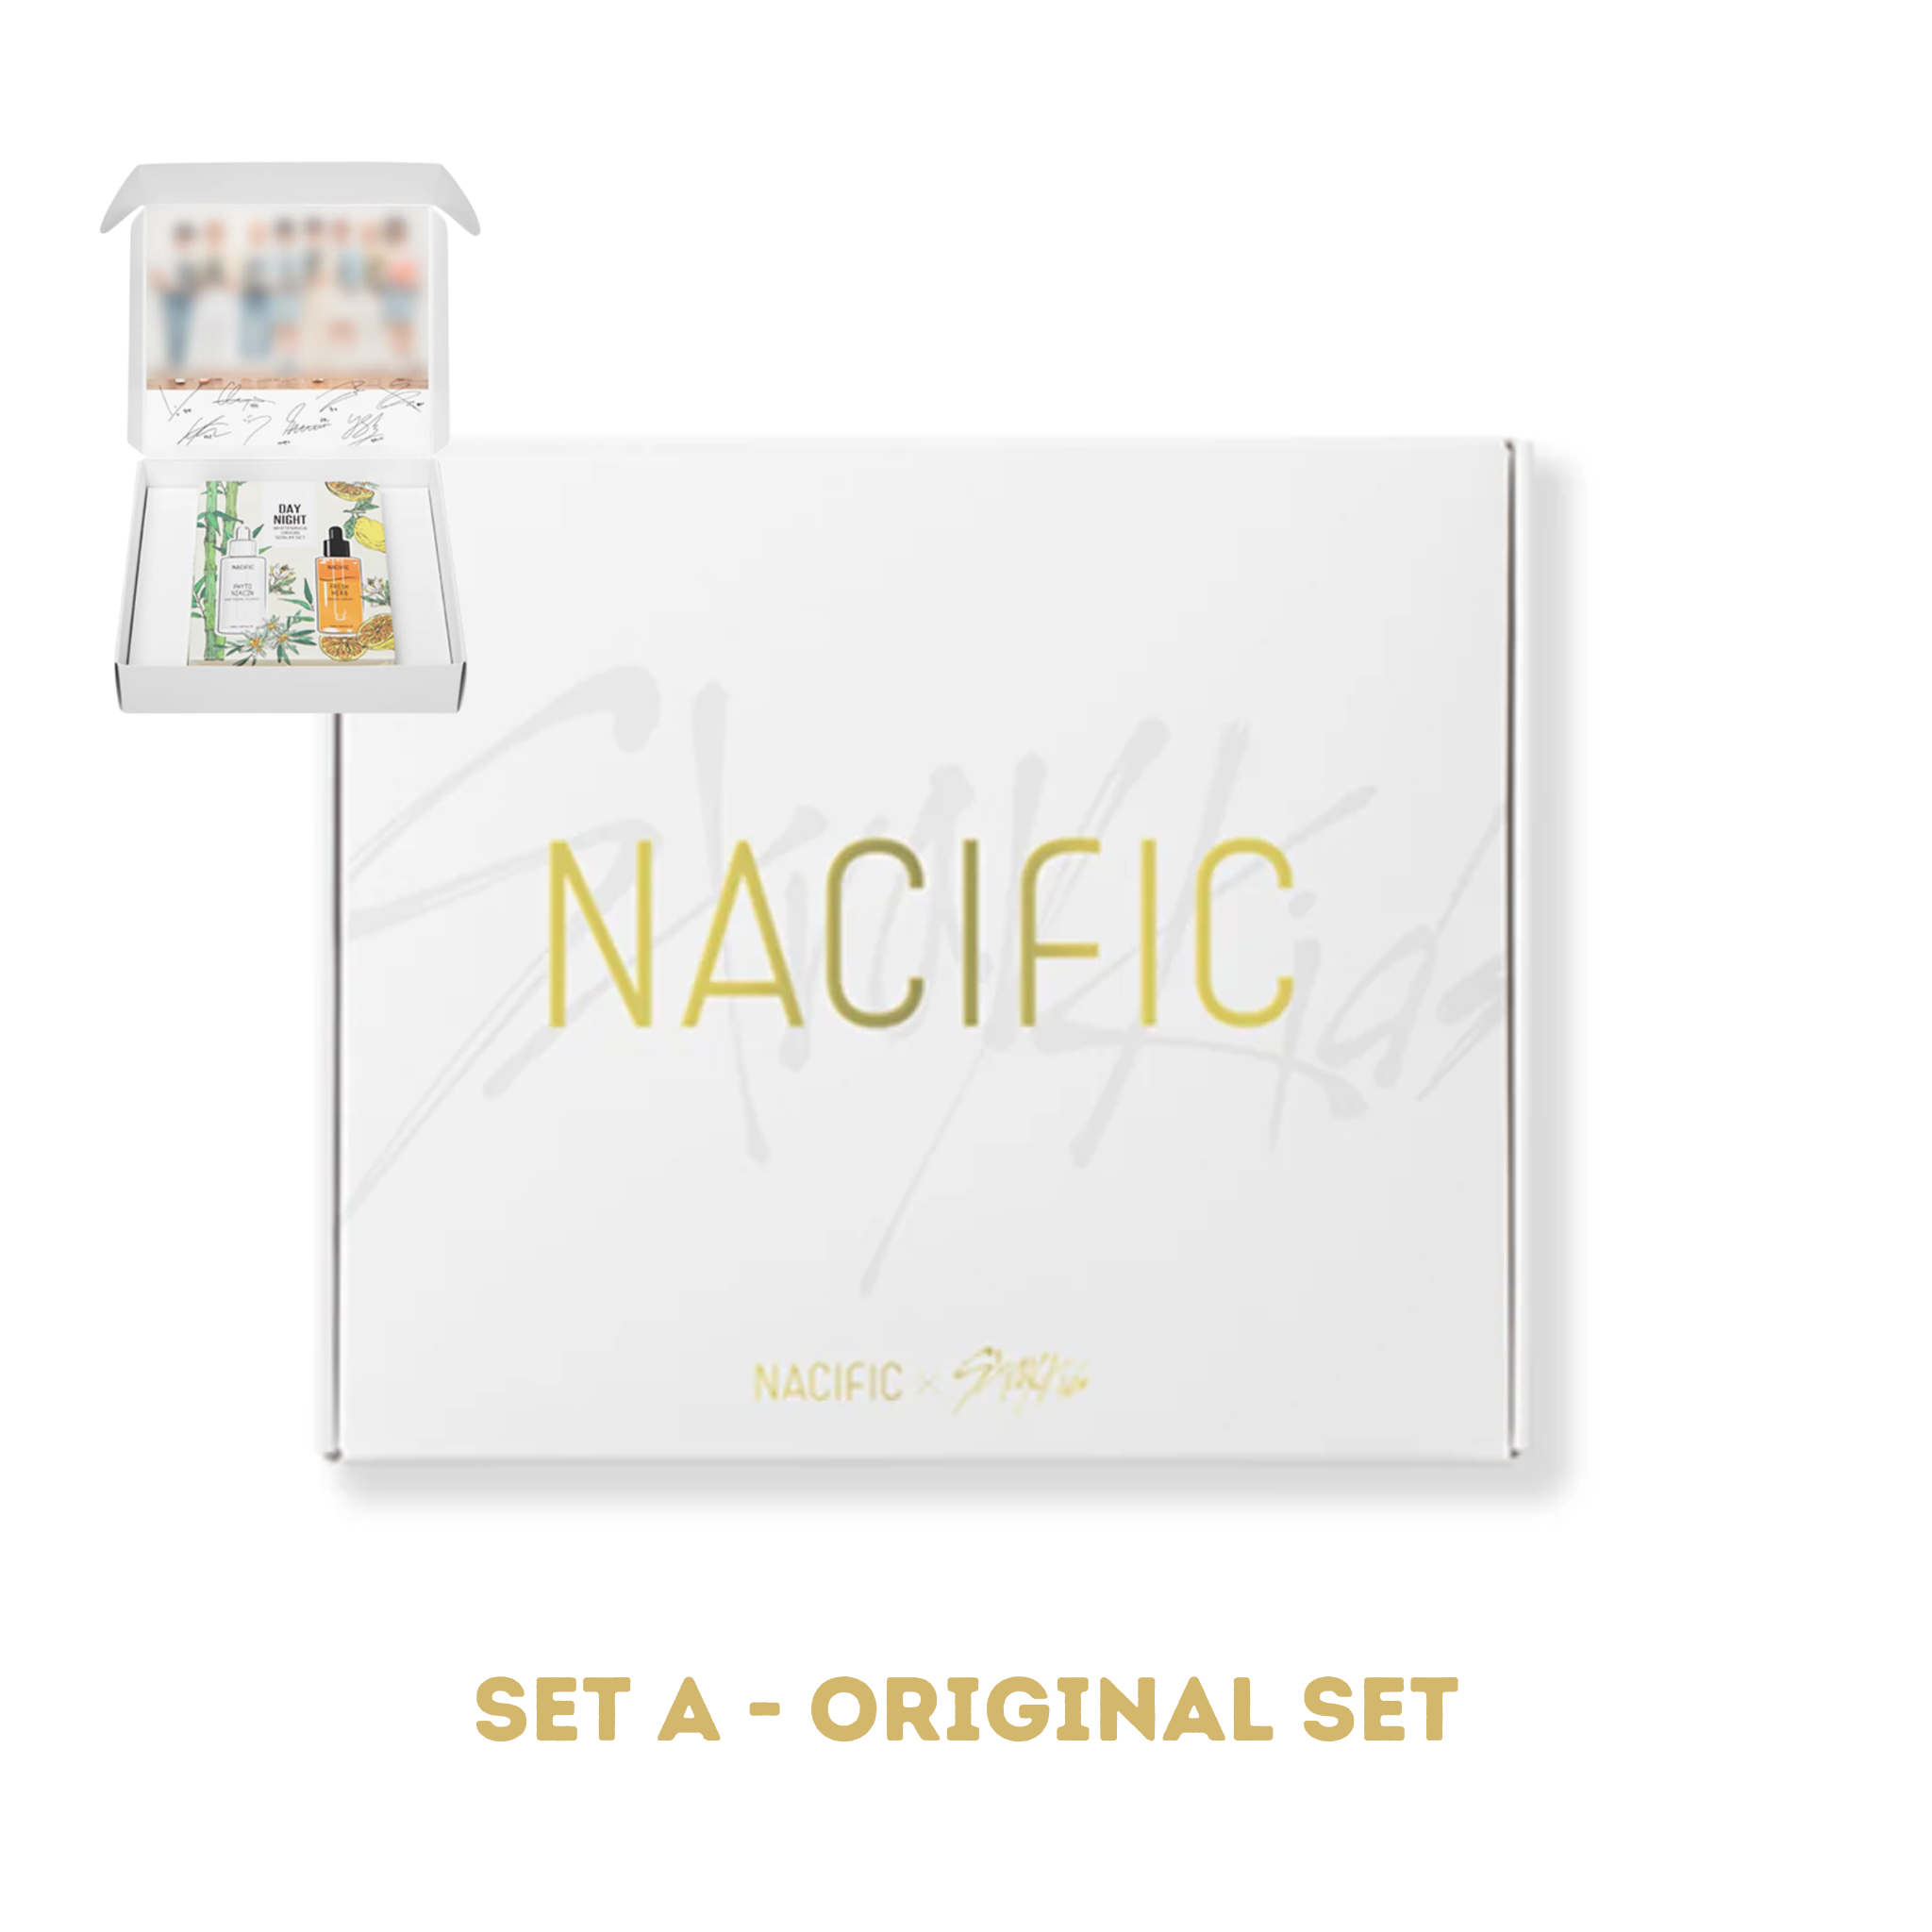 NACIFIC X STRAY KIDS Collaboration Box (Limited Edition) Set A